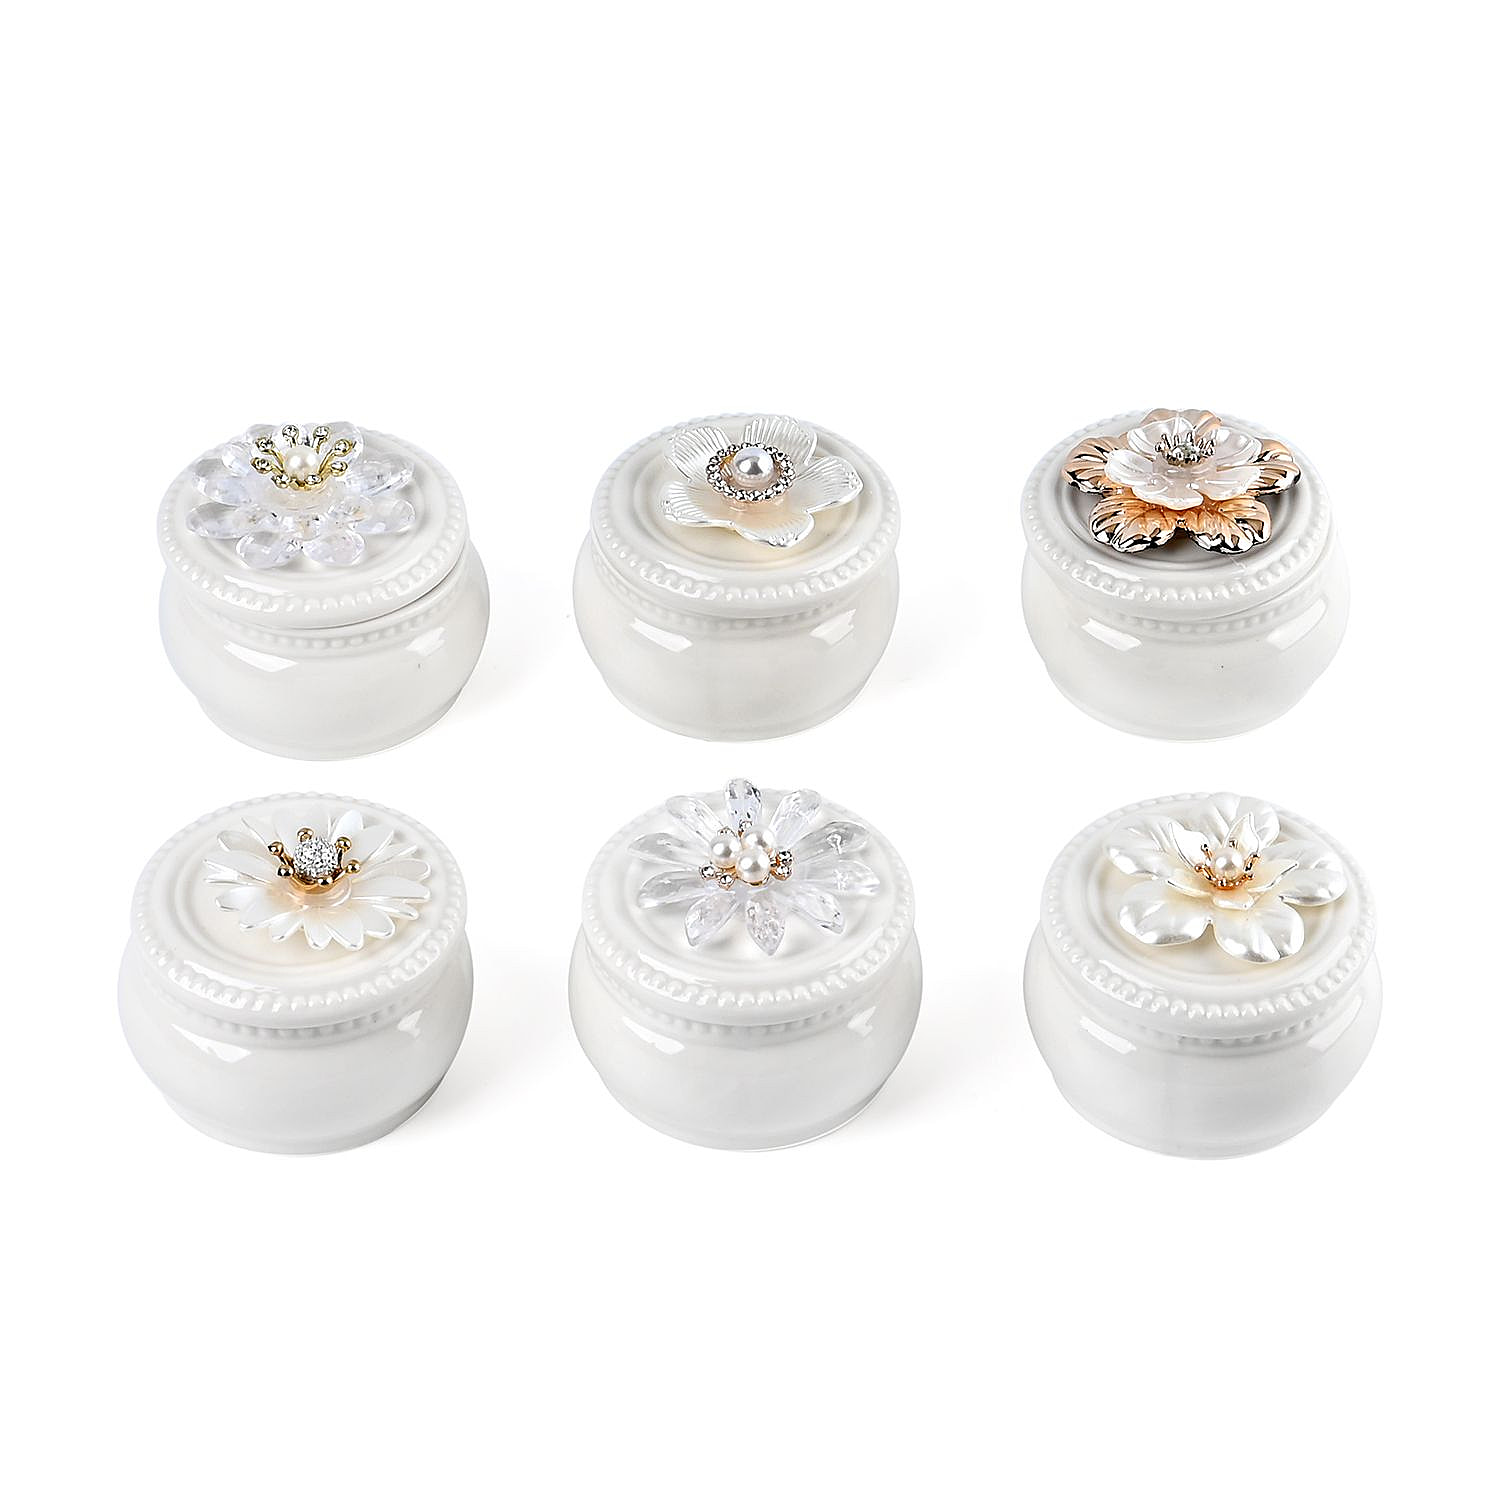 Set of 6 - Fine Porcelain Decor Storage Box with Floral Pattern 100% Heat-Resistant Lid - White